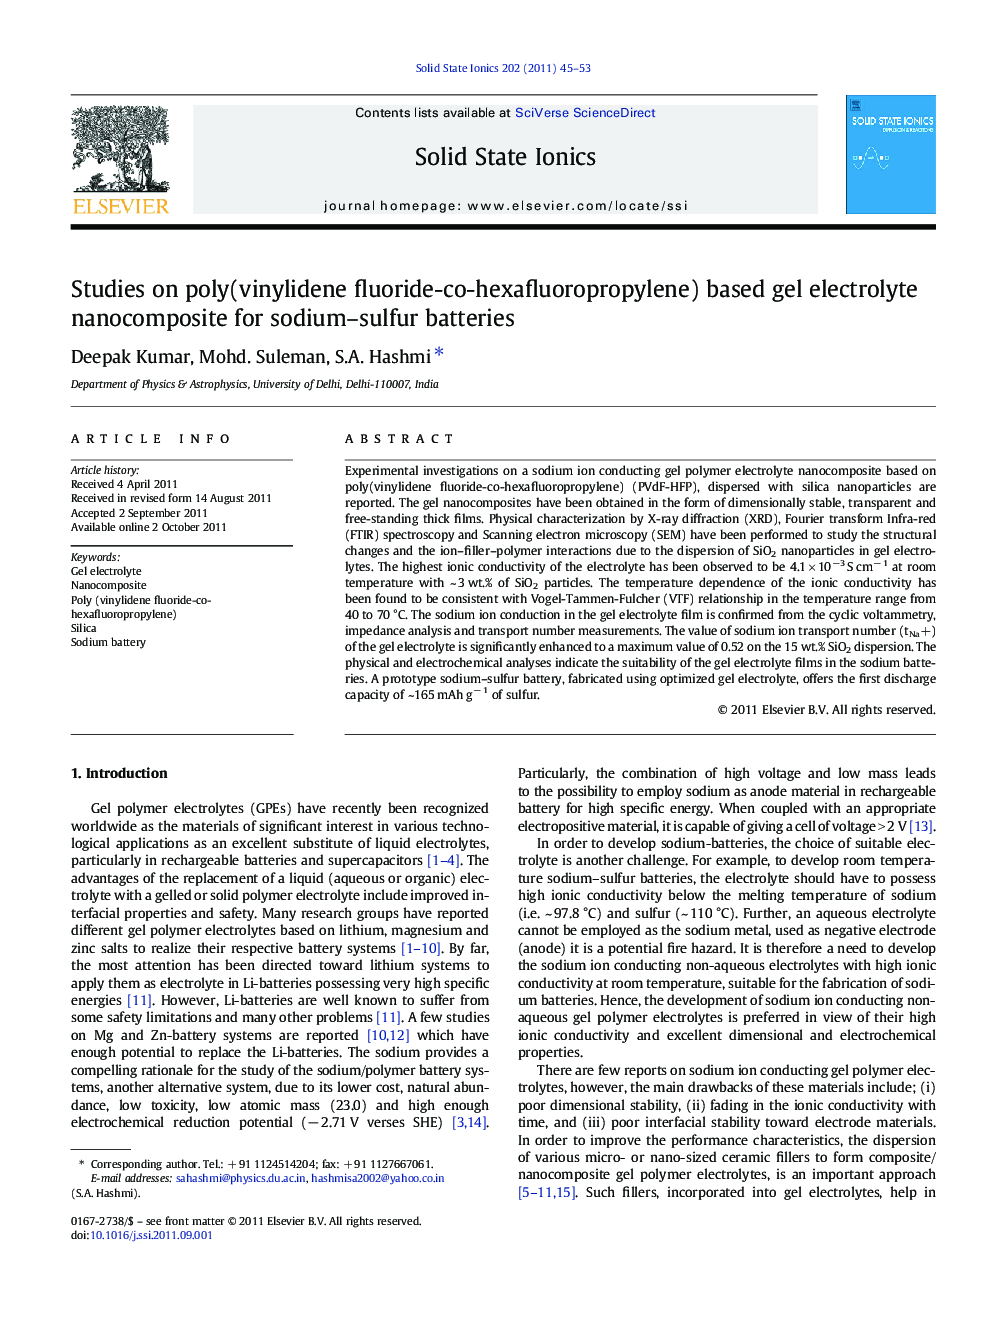 Studies on poly(vinylidene fluoride-co-hexafluoropropylene) based gel electrolyte nanocomposite for sodium-sulfur batteries